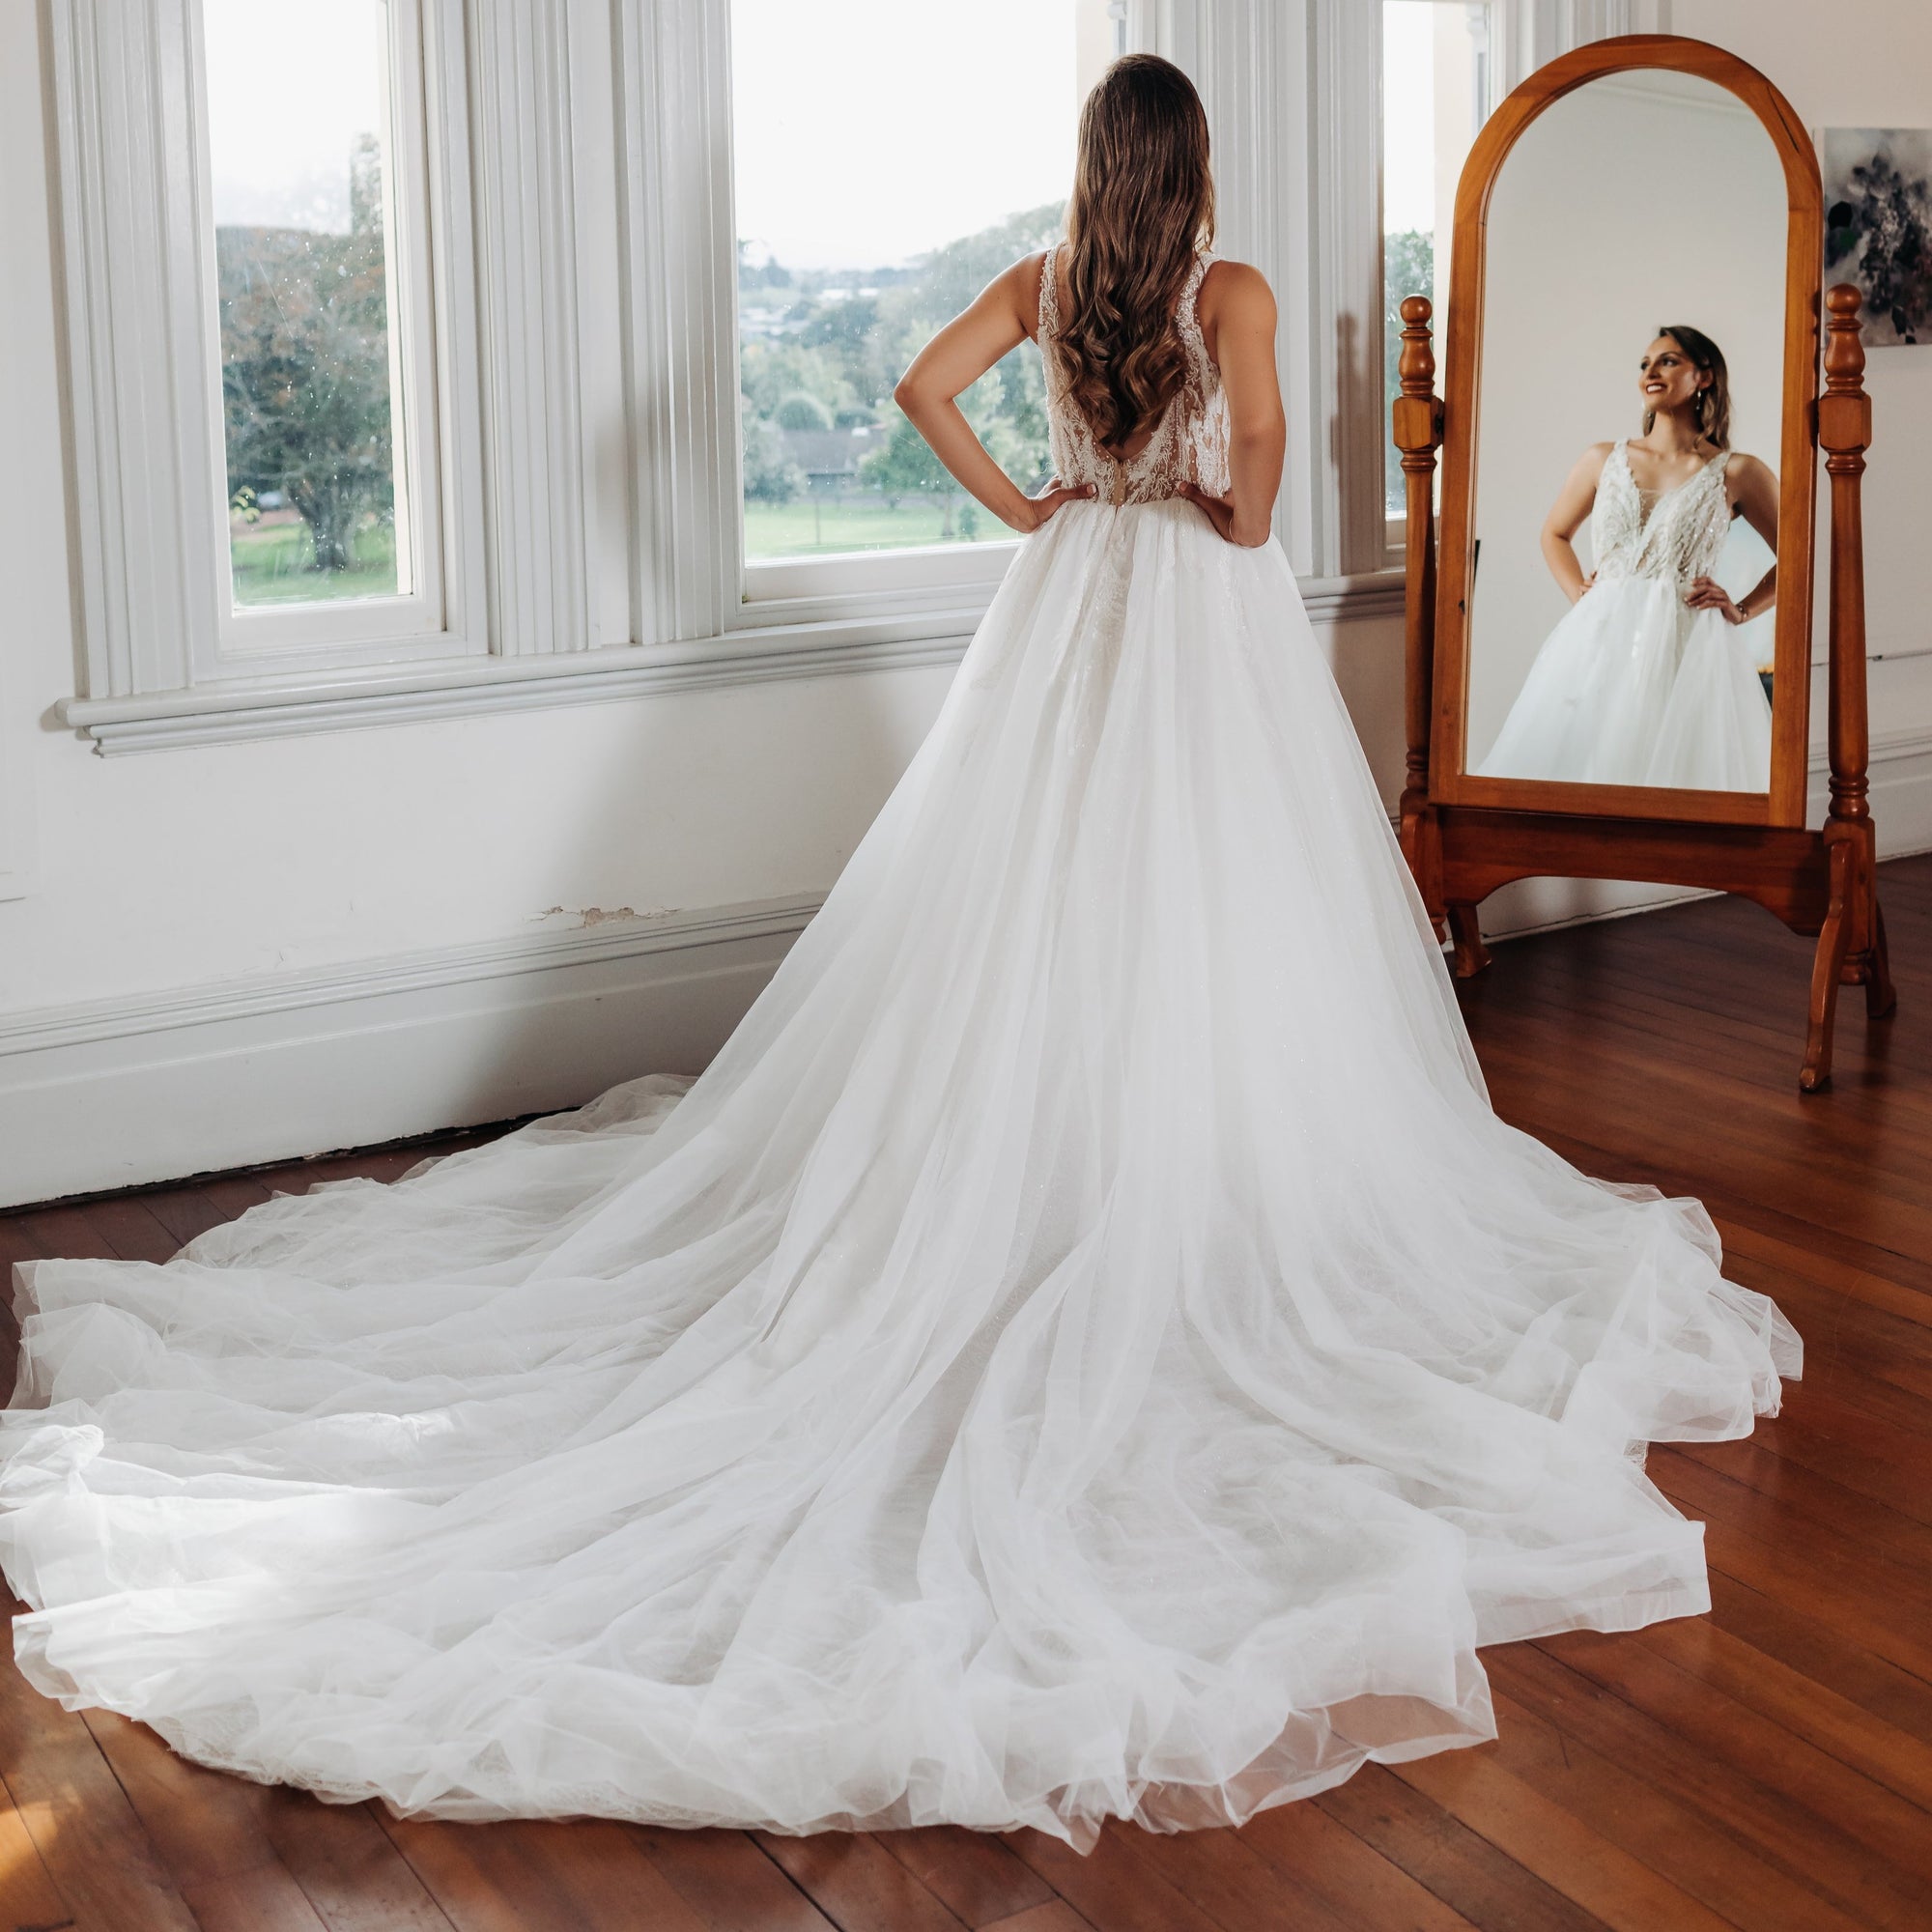 TESSA - white chiffon wedding dress – I SWEAR YOU